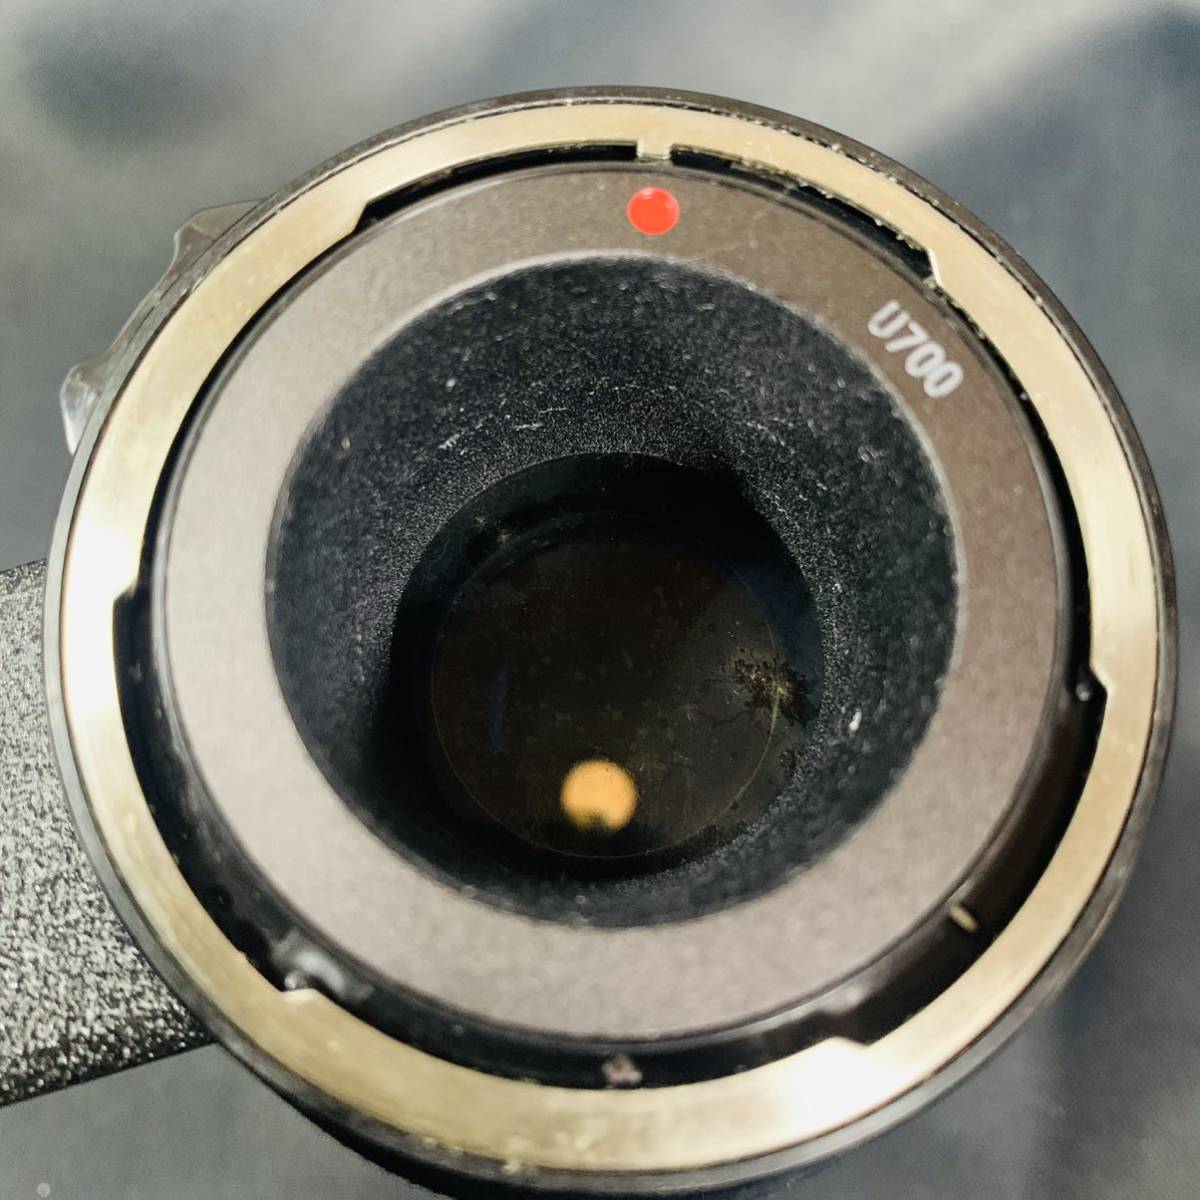 CANON キャノン REFLEX LENS 500mm 1:8 一眼レフカメラ用 レンズ 反射望遠レンズ _画像3